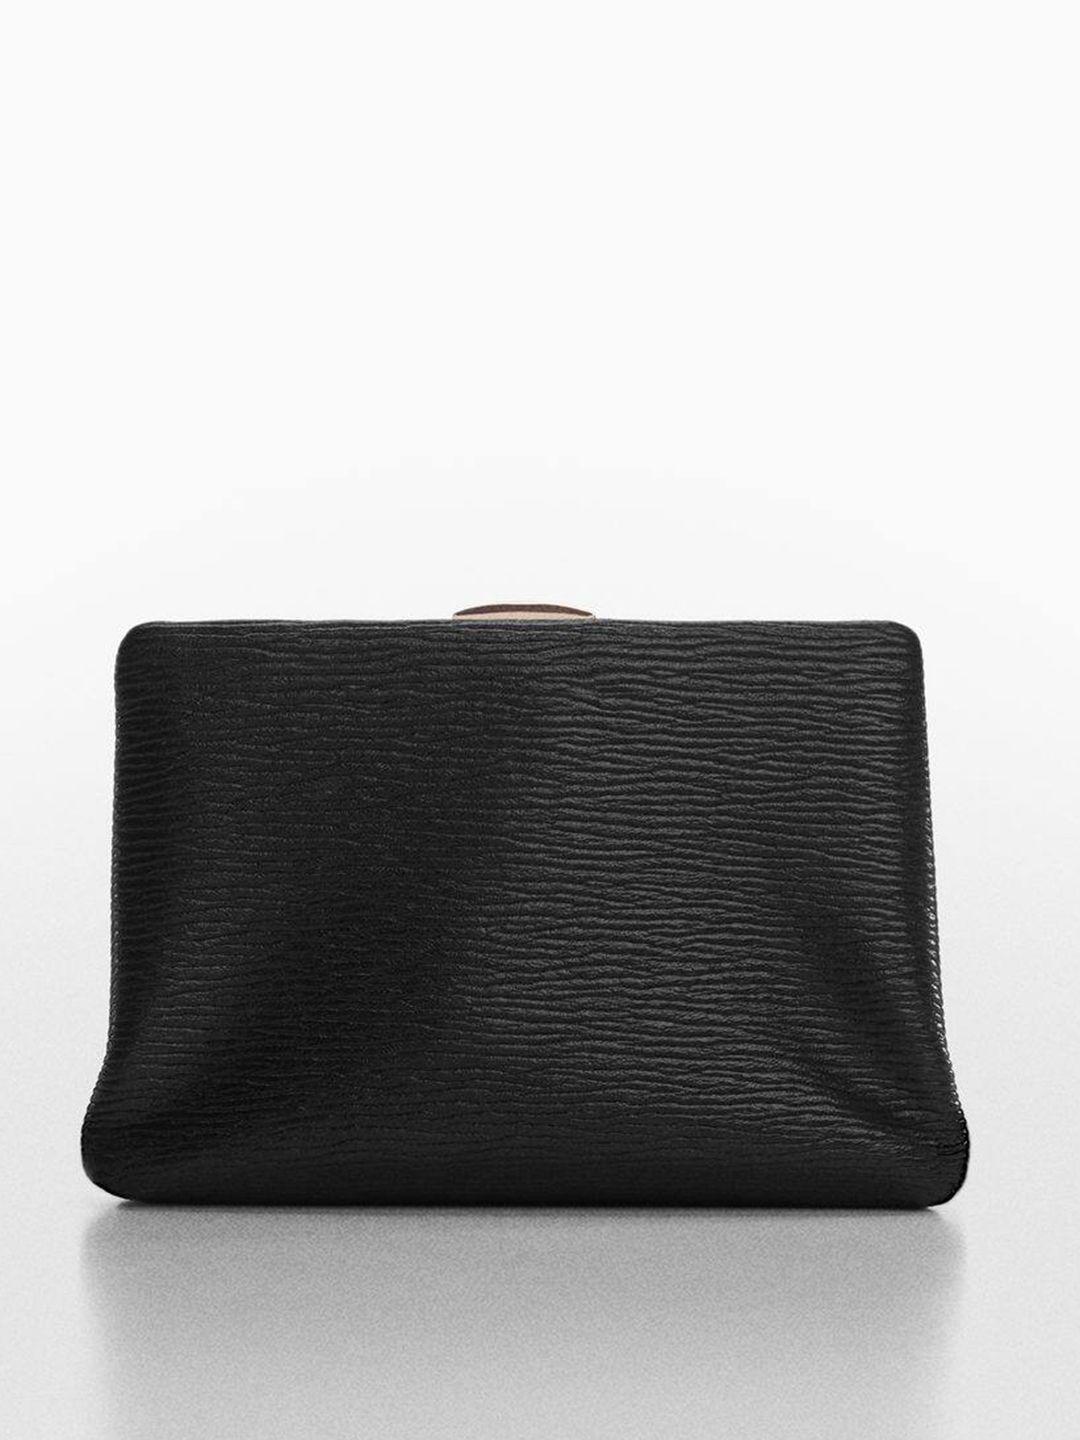 mango-black-textured-purse-clutch